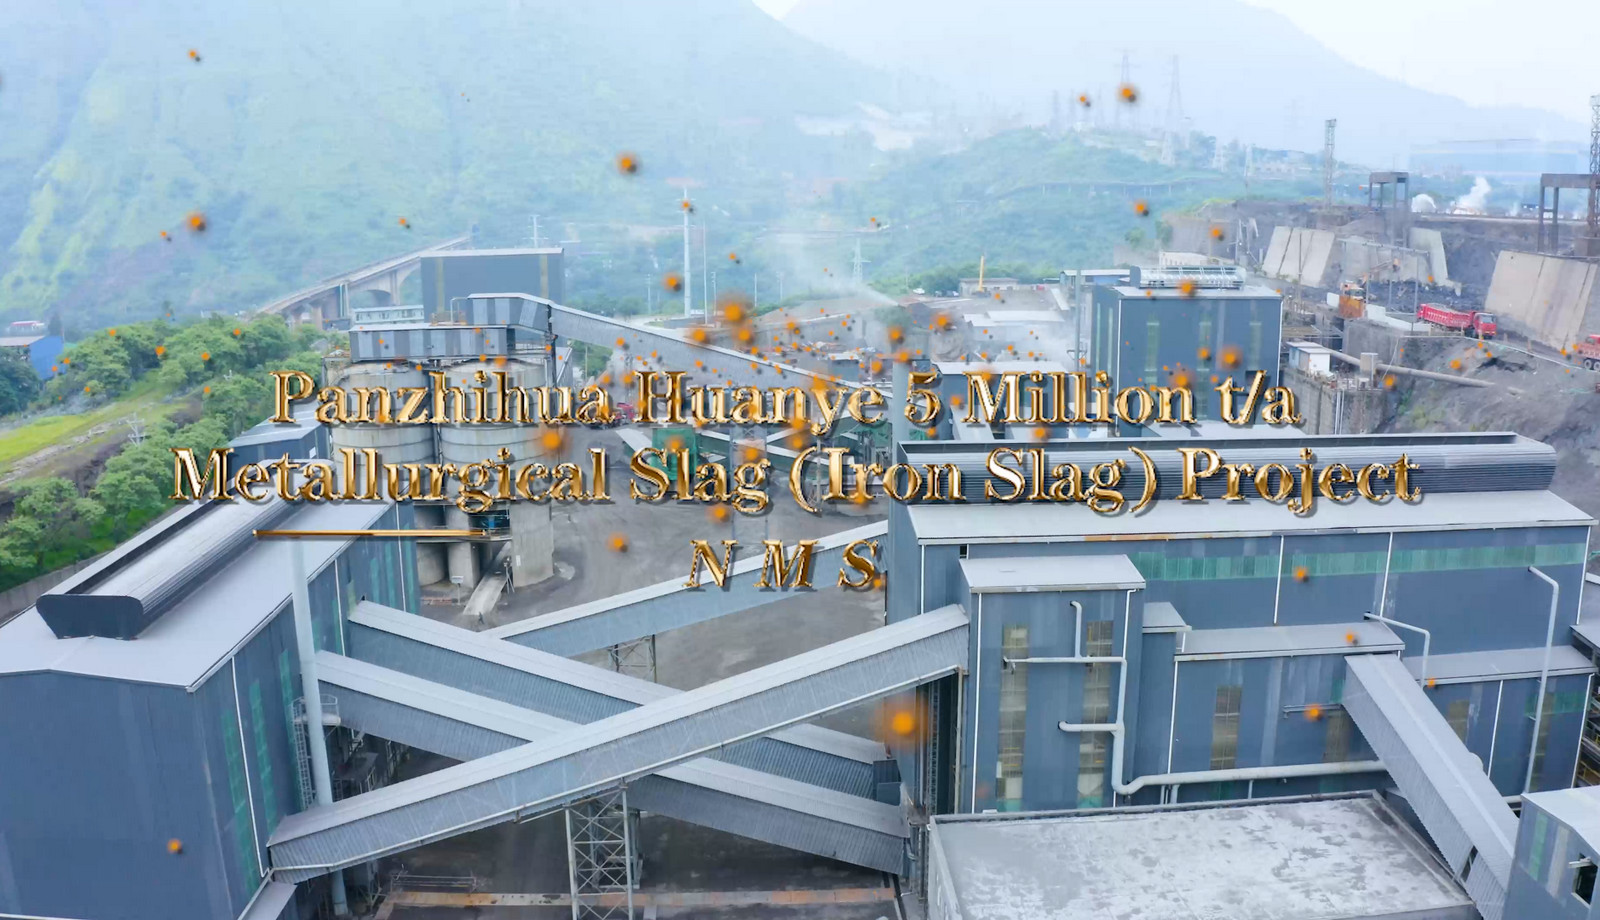 Panzhihua Huanye 5 Million t/a Metallurgical Slag (Iron Slag) Project